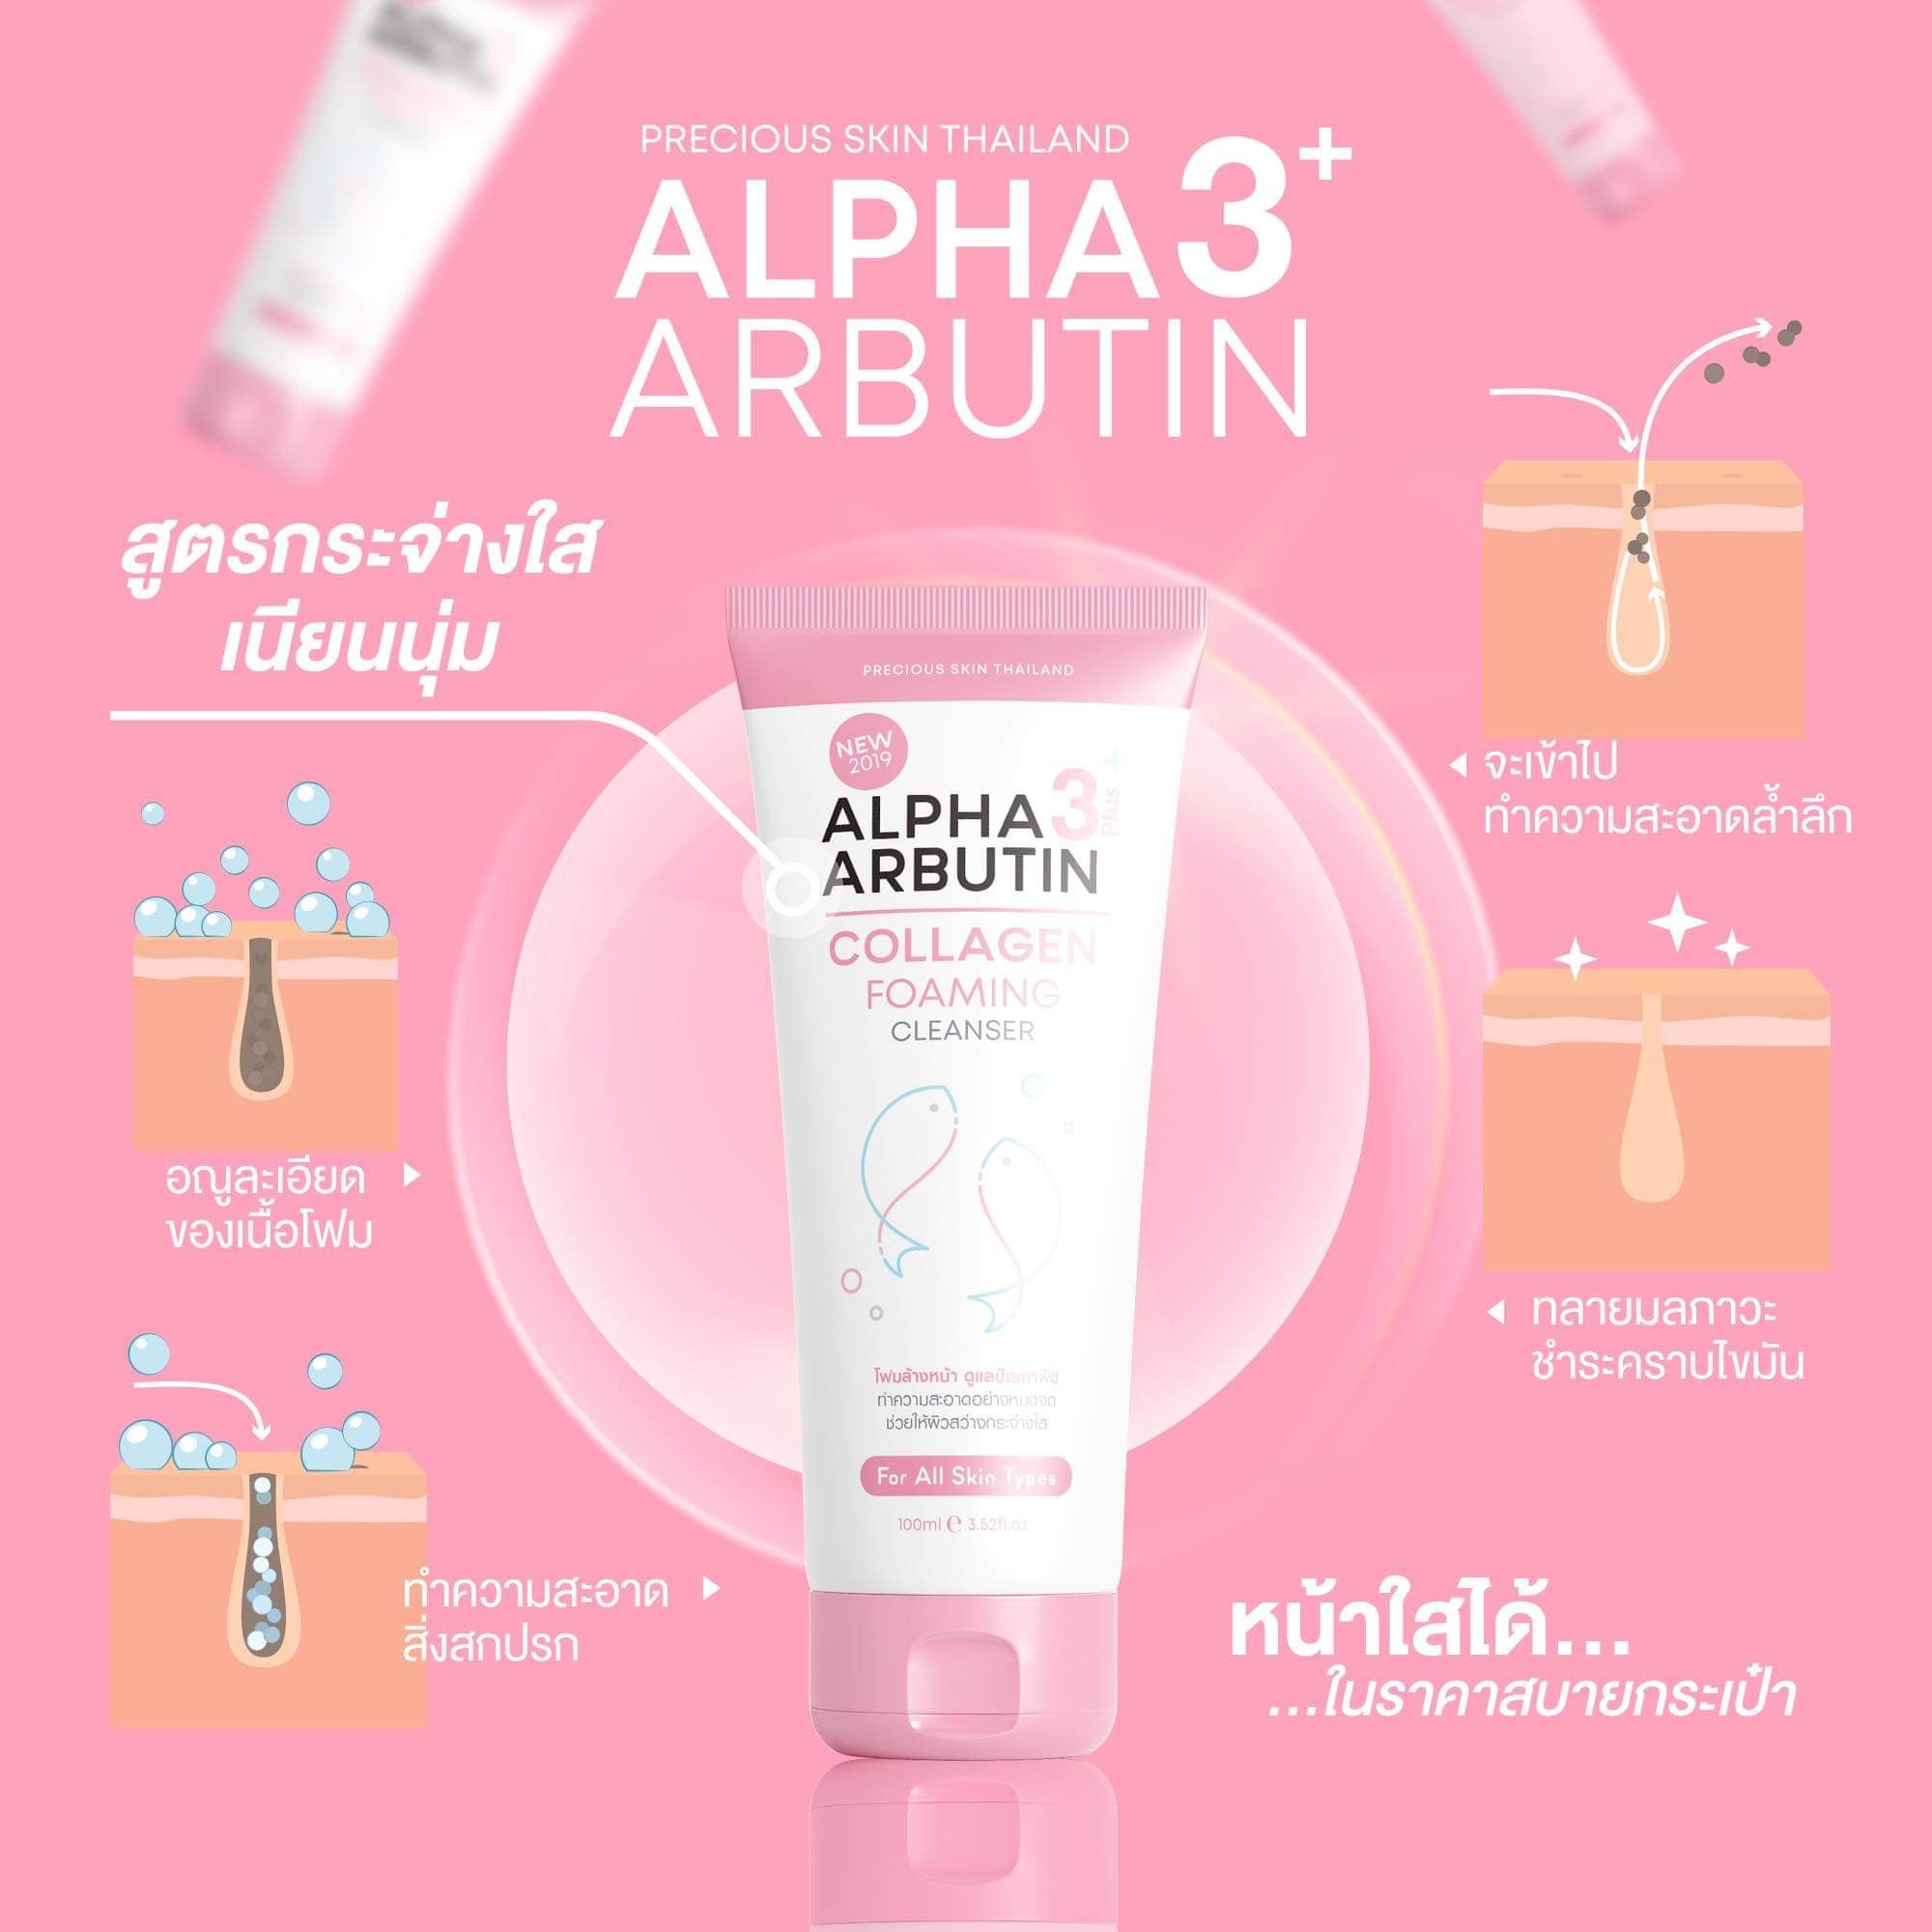 Sữa rửa mặt Alpha Arbutin Lollagen Foaming Cleanser